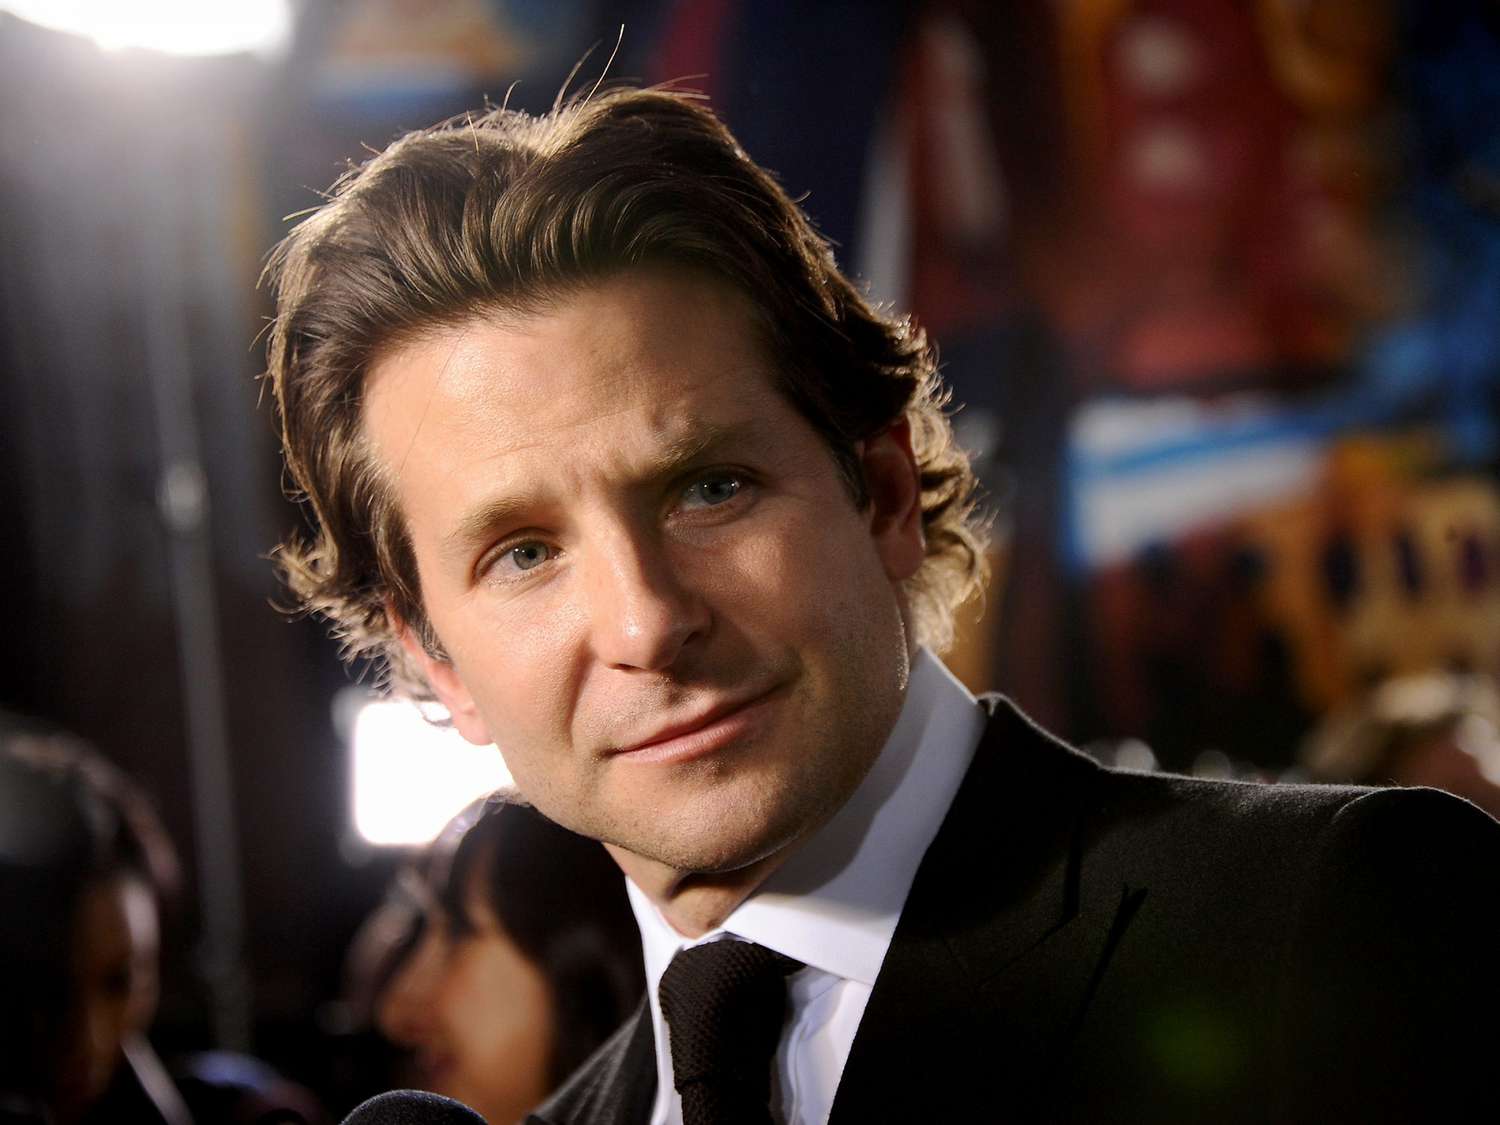 Bradley Cooper at the American Sniper New York Premiere on December 15, 2014